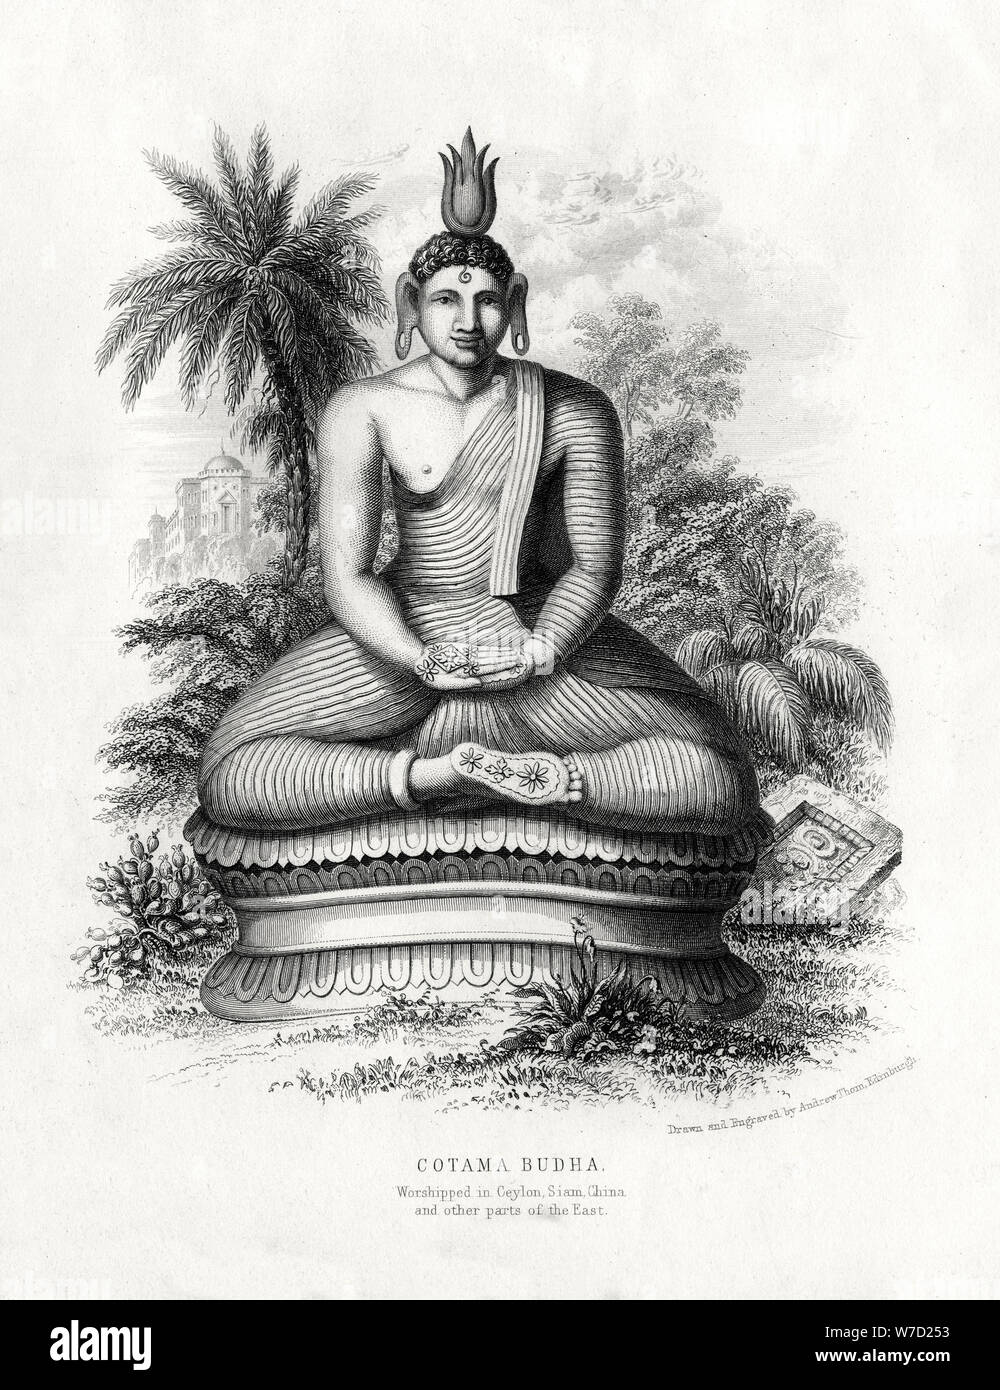 Cotoma Budha, in Ceylon, Siam, China, 19. Jahrhundert verehrt. Artist: Andreas Thom Stockfoto